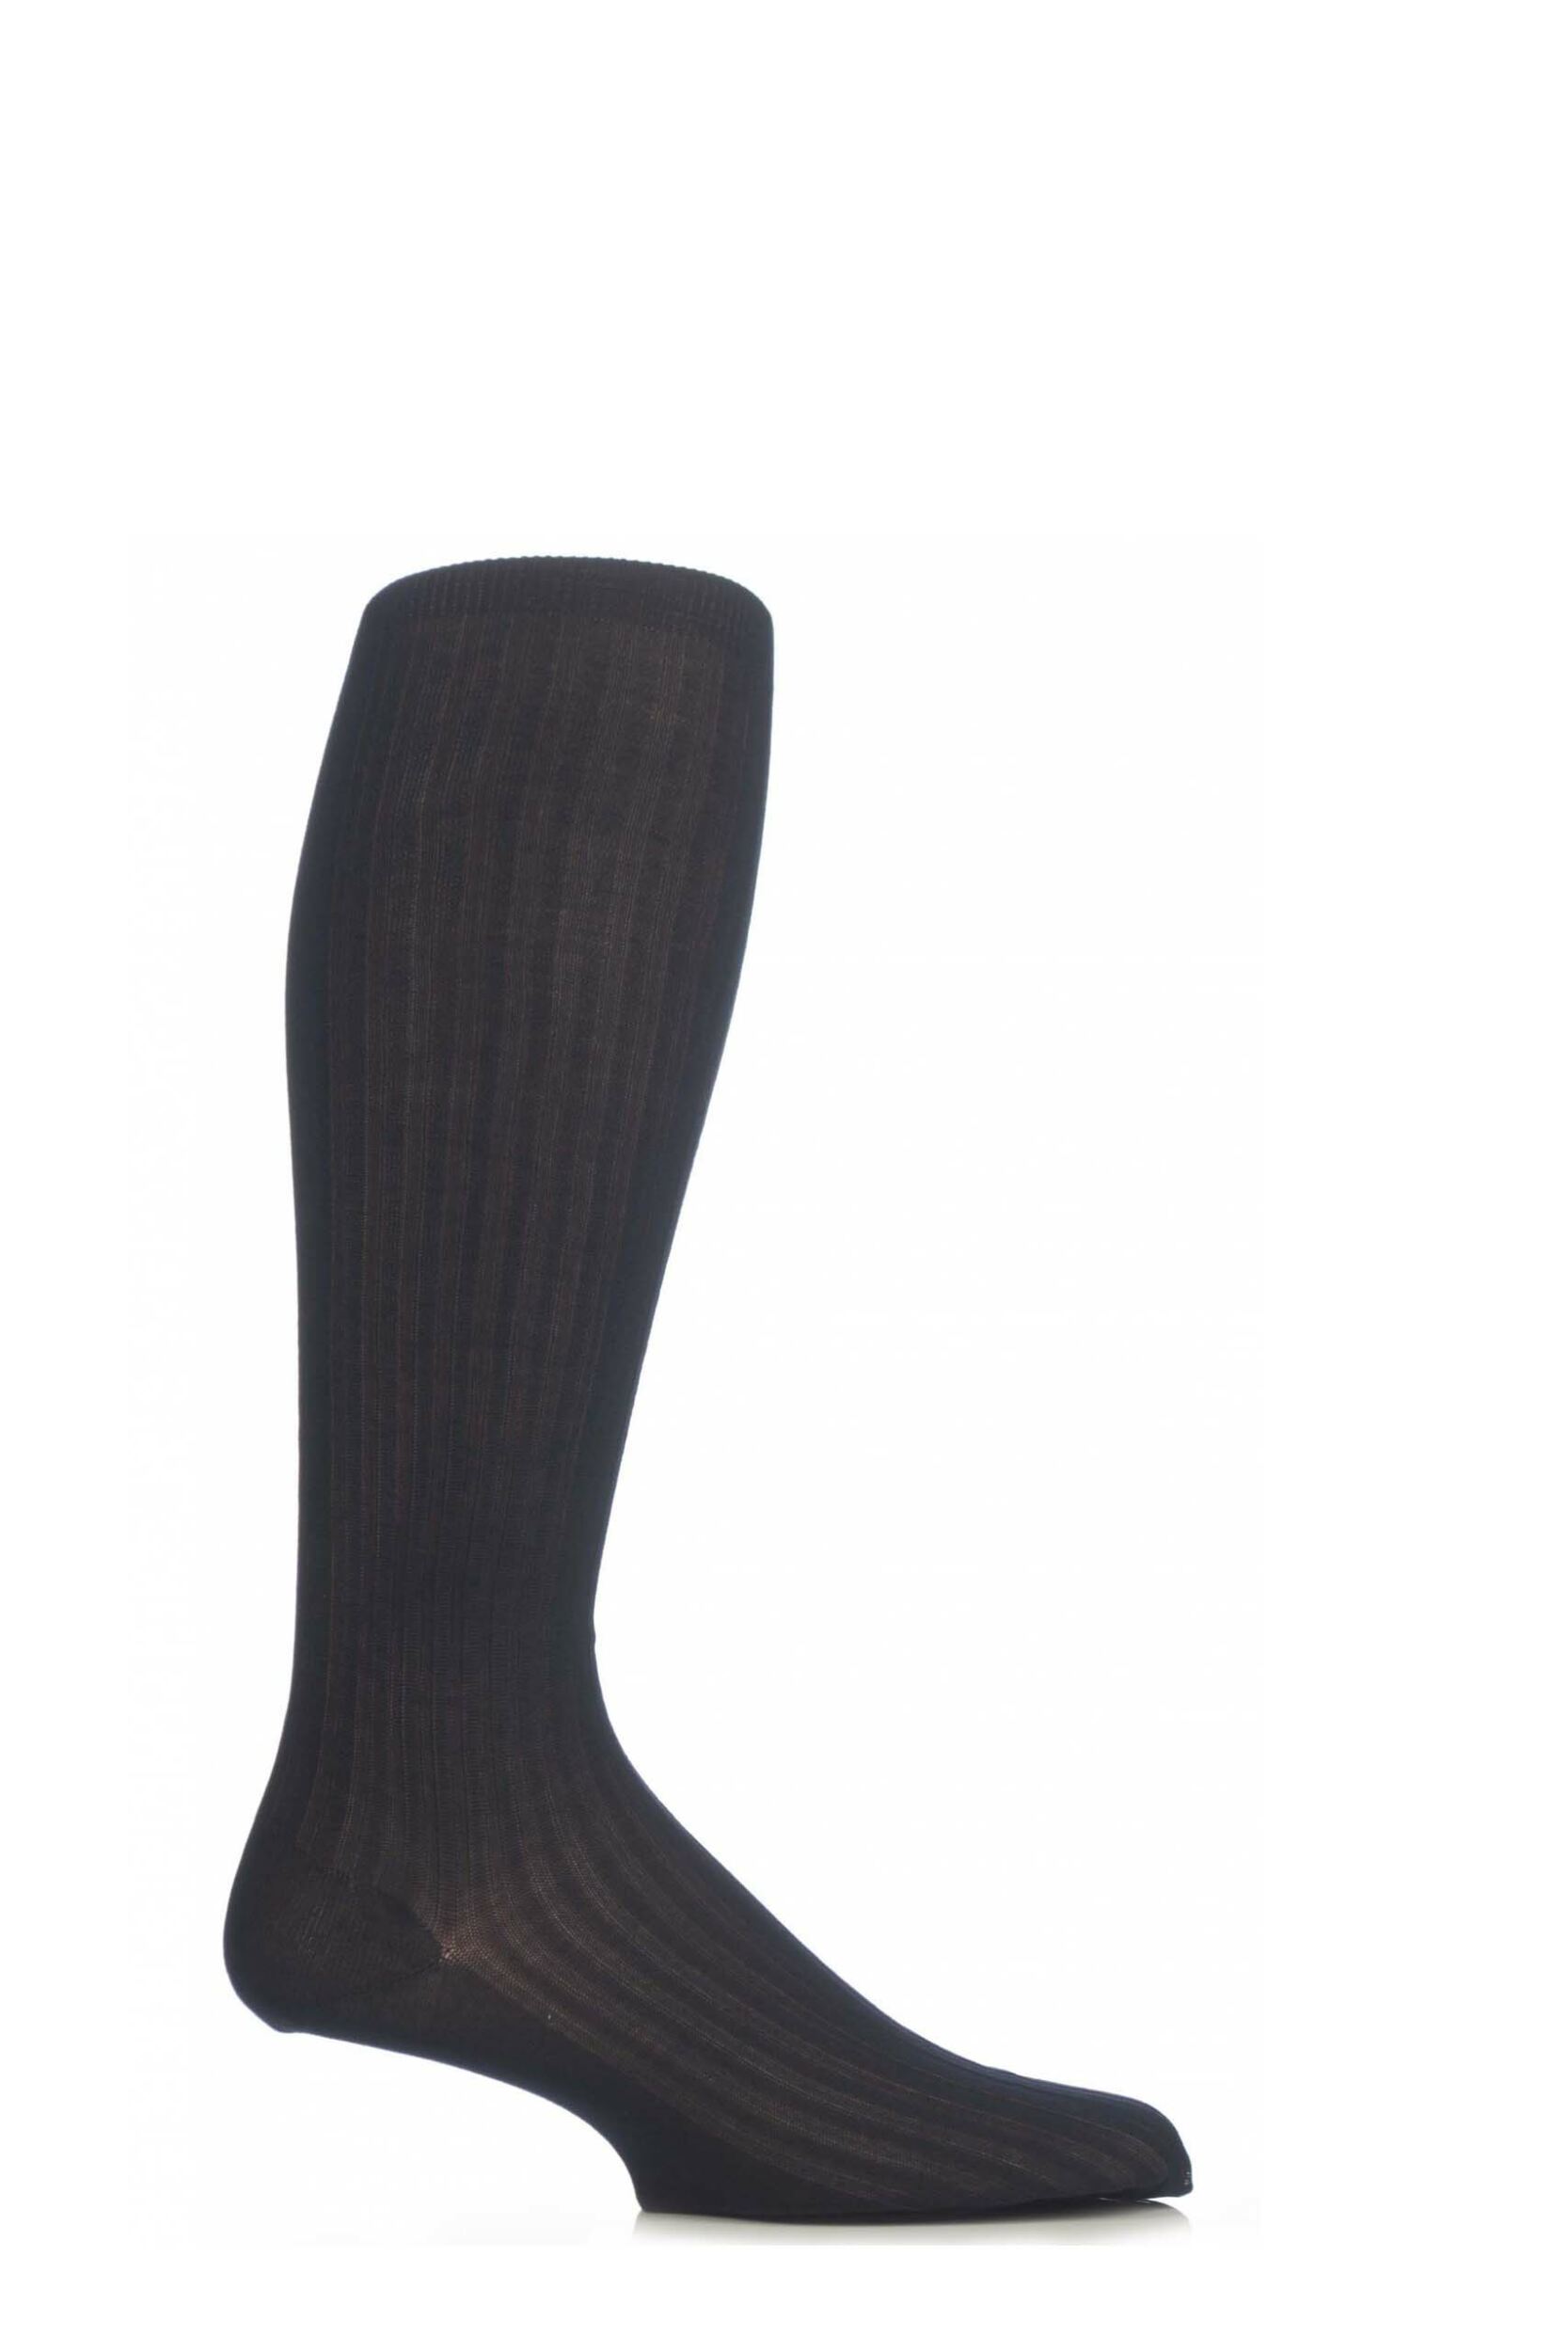 Mens 1 Pair Pantherella Merino Wool Rib Knee High Socks | eBay